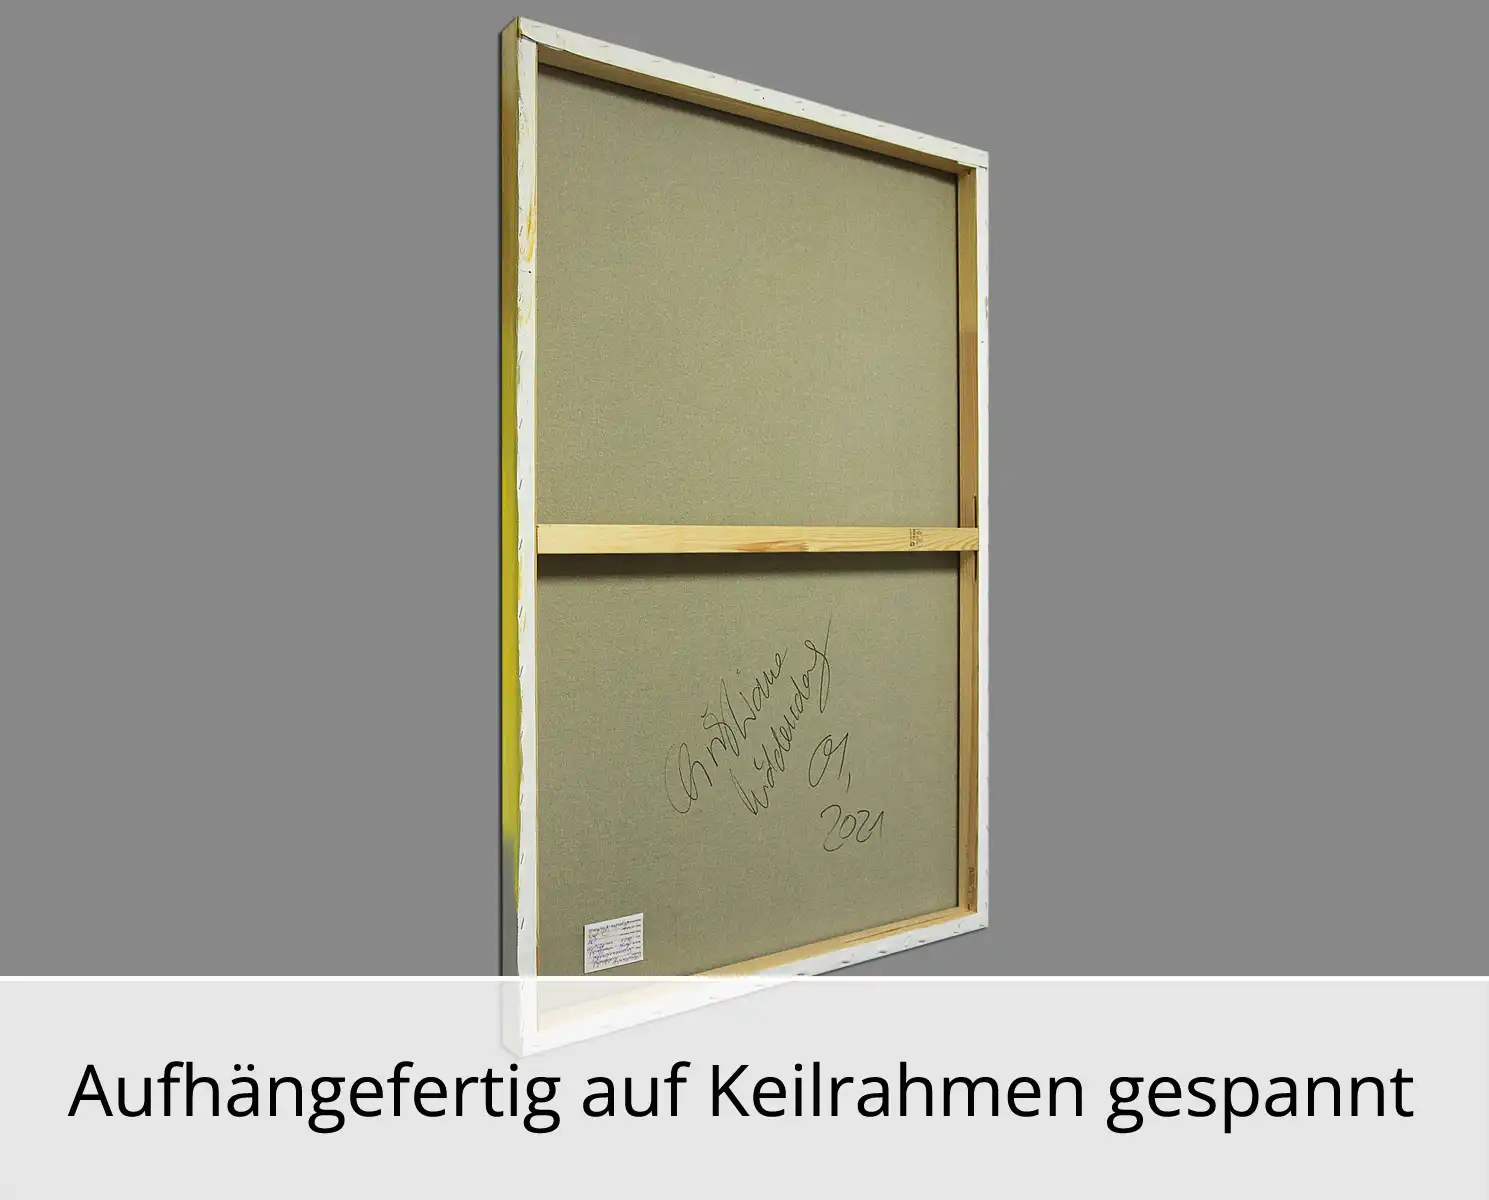 C. Middendorf: "Sonnenstrahlen I", abstraktes Originalgemälde (Unikat)